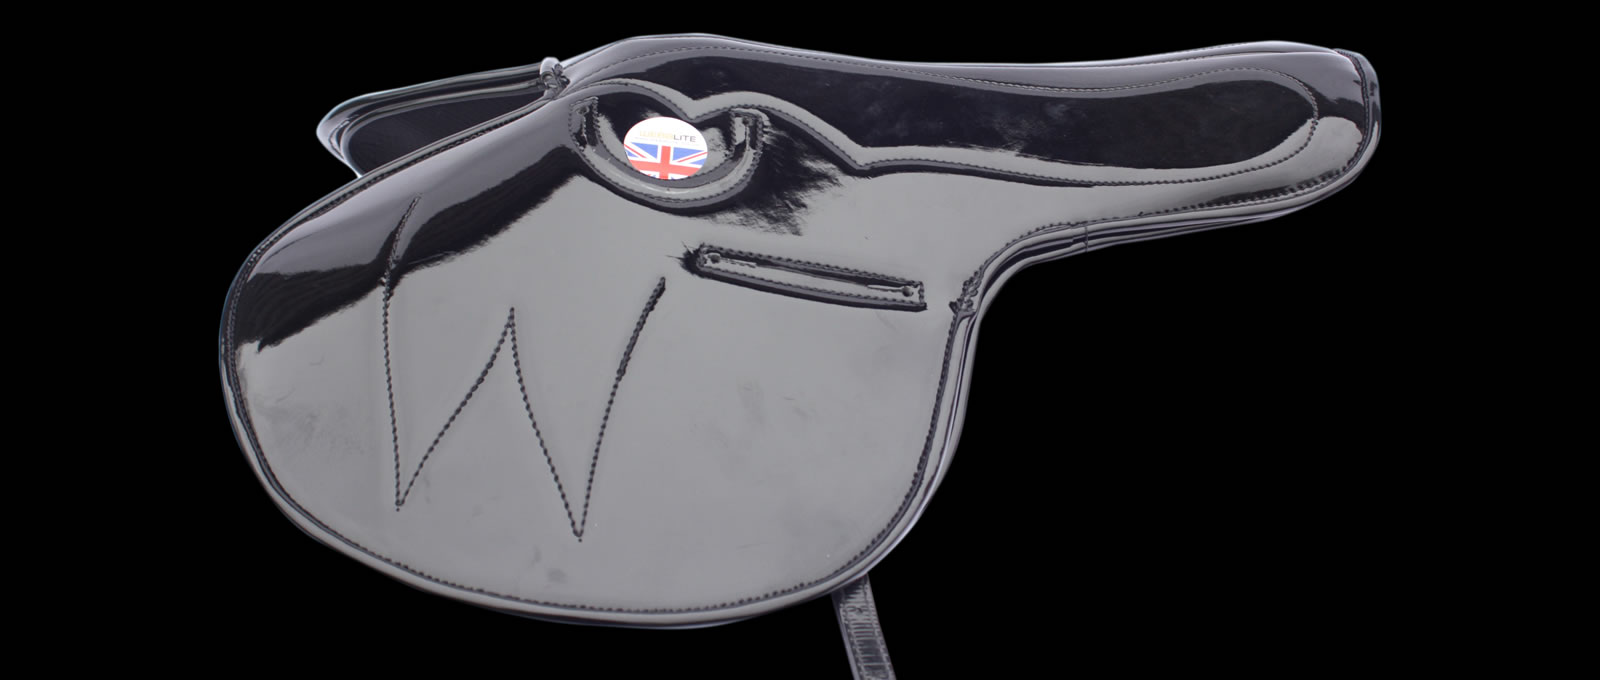 Horse Racing Saddles for sale at Webblite - large image of racing saddle